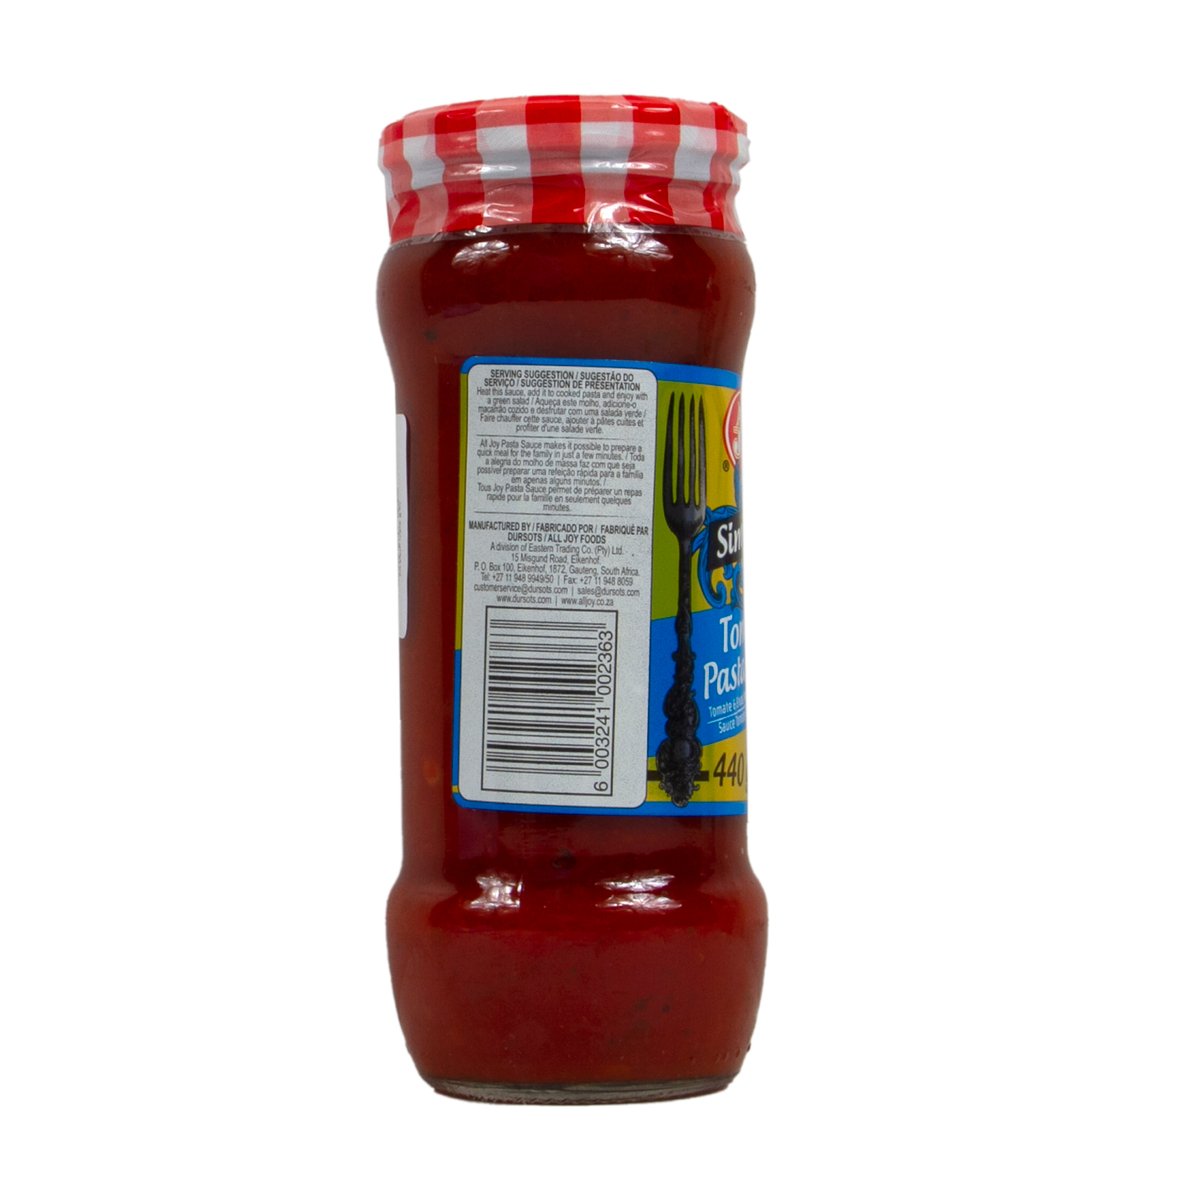 All Joy Tomato & Herb Pasta Sauce 440 g